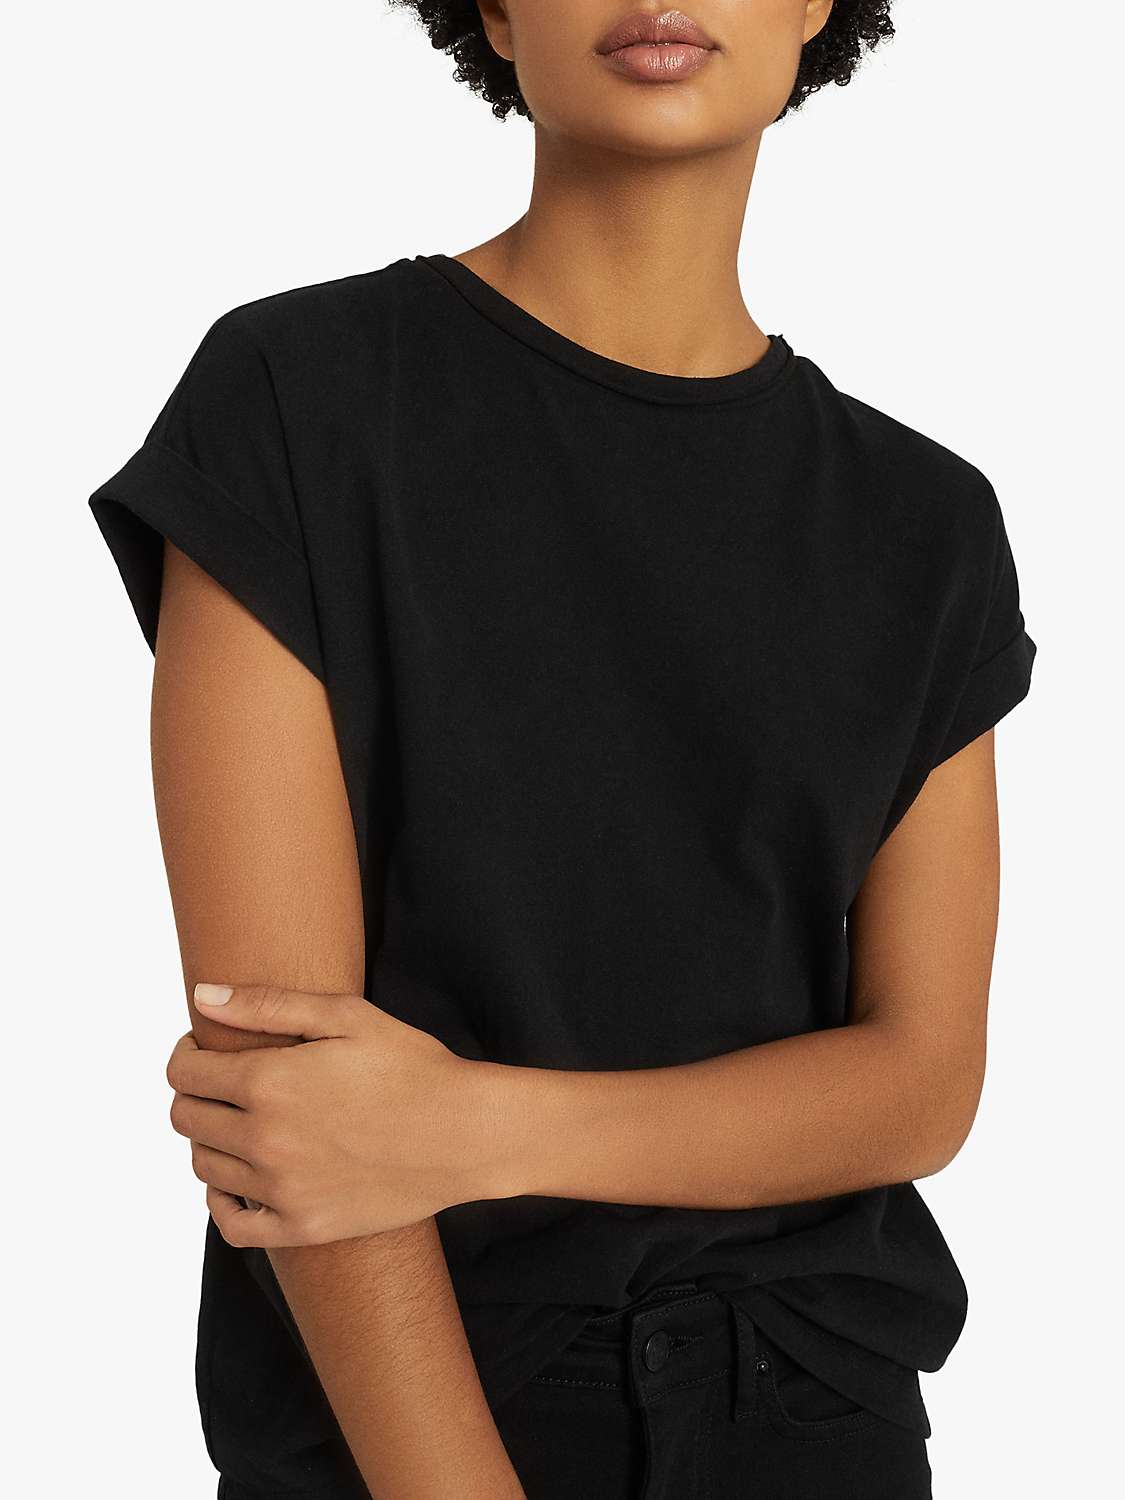 Reiss Tereza Cotton Jersey T-Shirt, Black at John Lewis & Partners